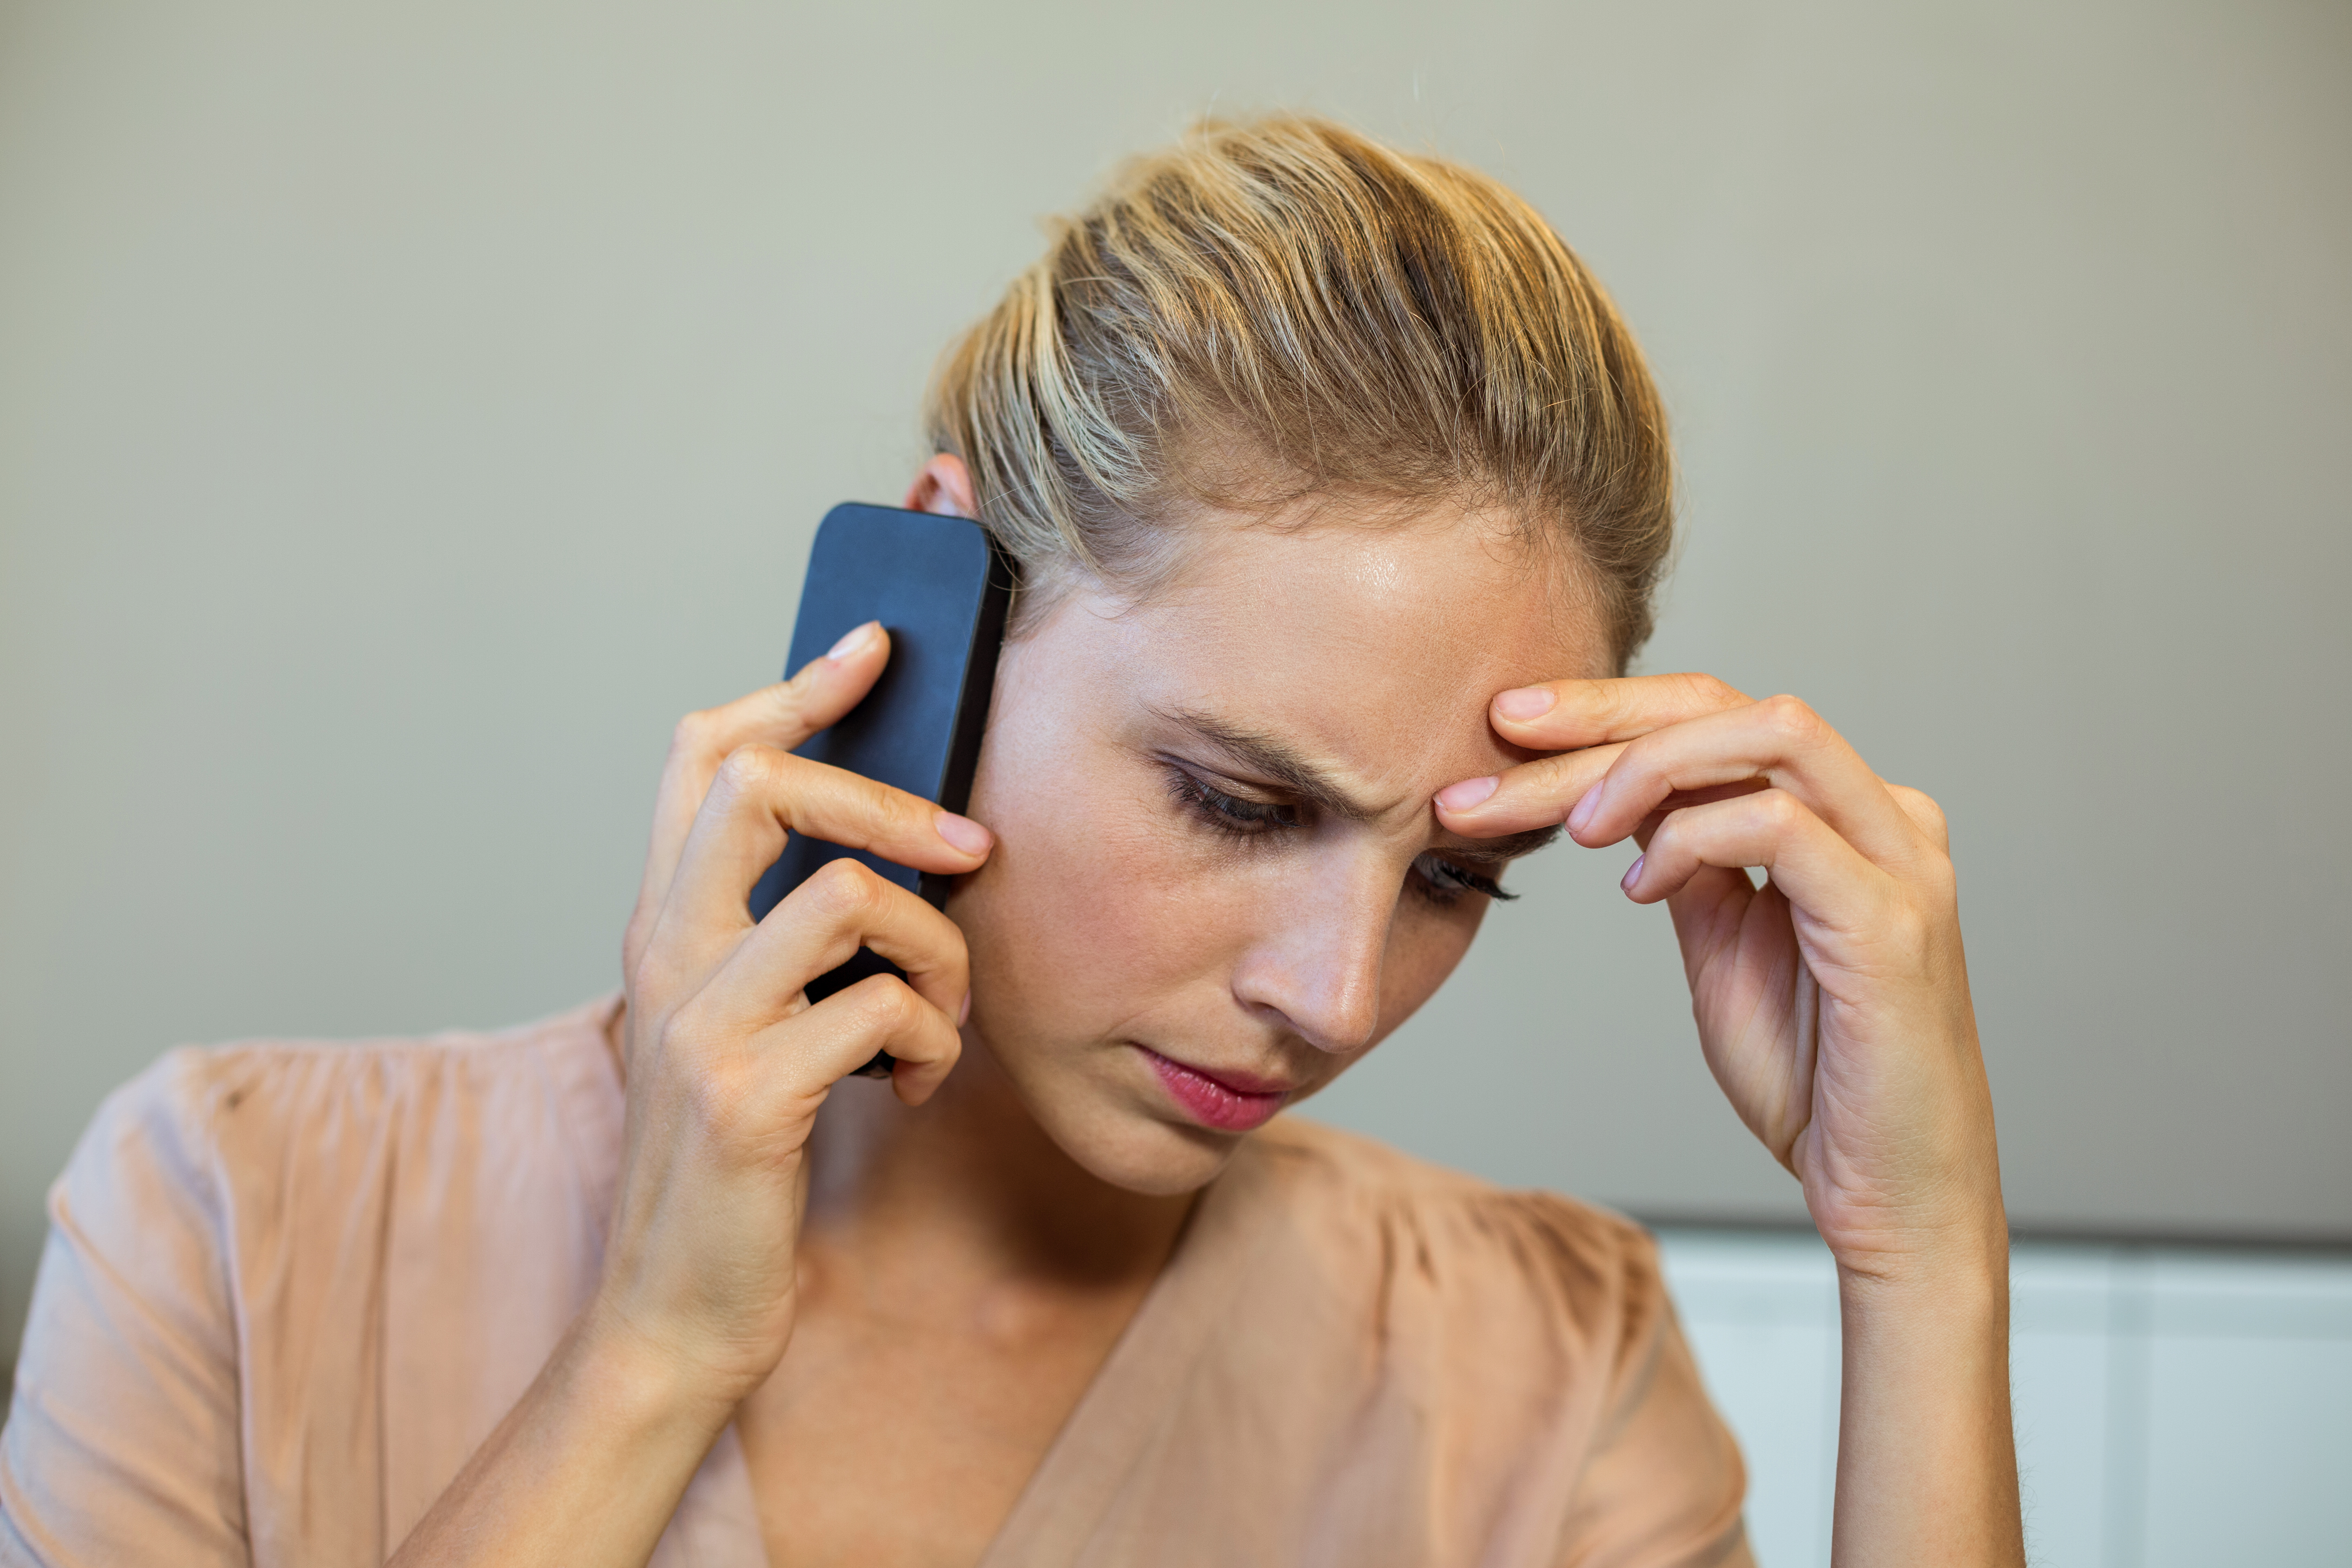 An upset woman on the phone | Source: Shutterstock